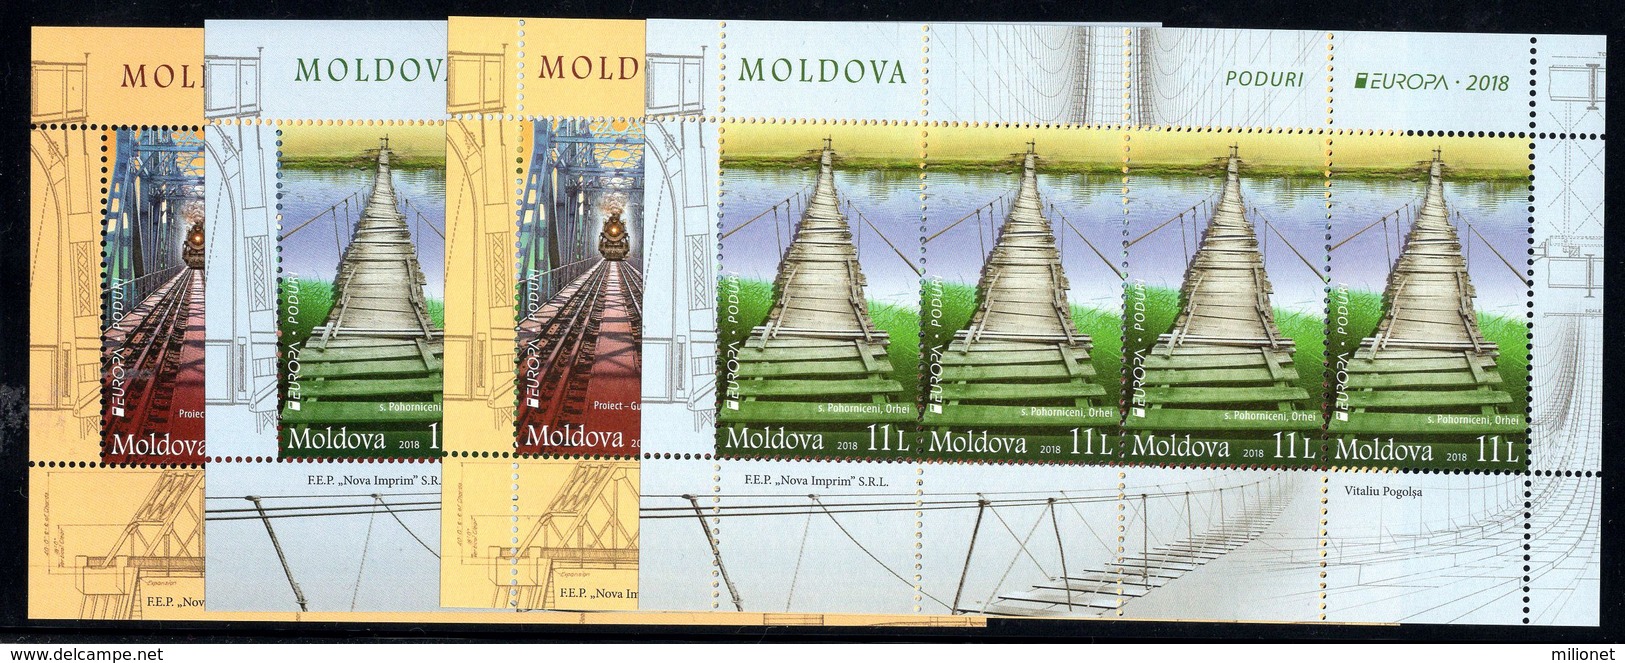 SALE!!! Moldova Moldavia Moldavie Moldawien 2018 EUROPA BRIDGES 2 X 2 Different Booklet Panes - SEE PERFORATION - MNH ** - 2018